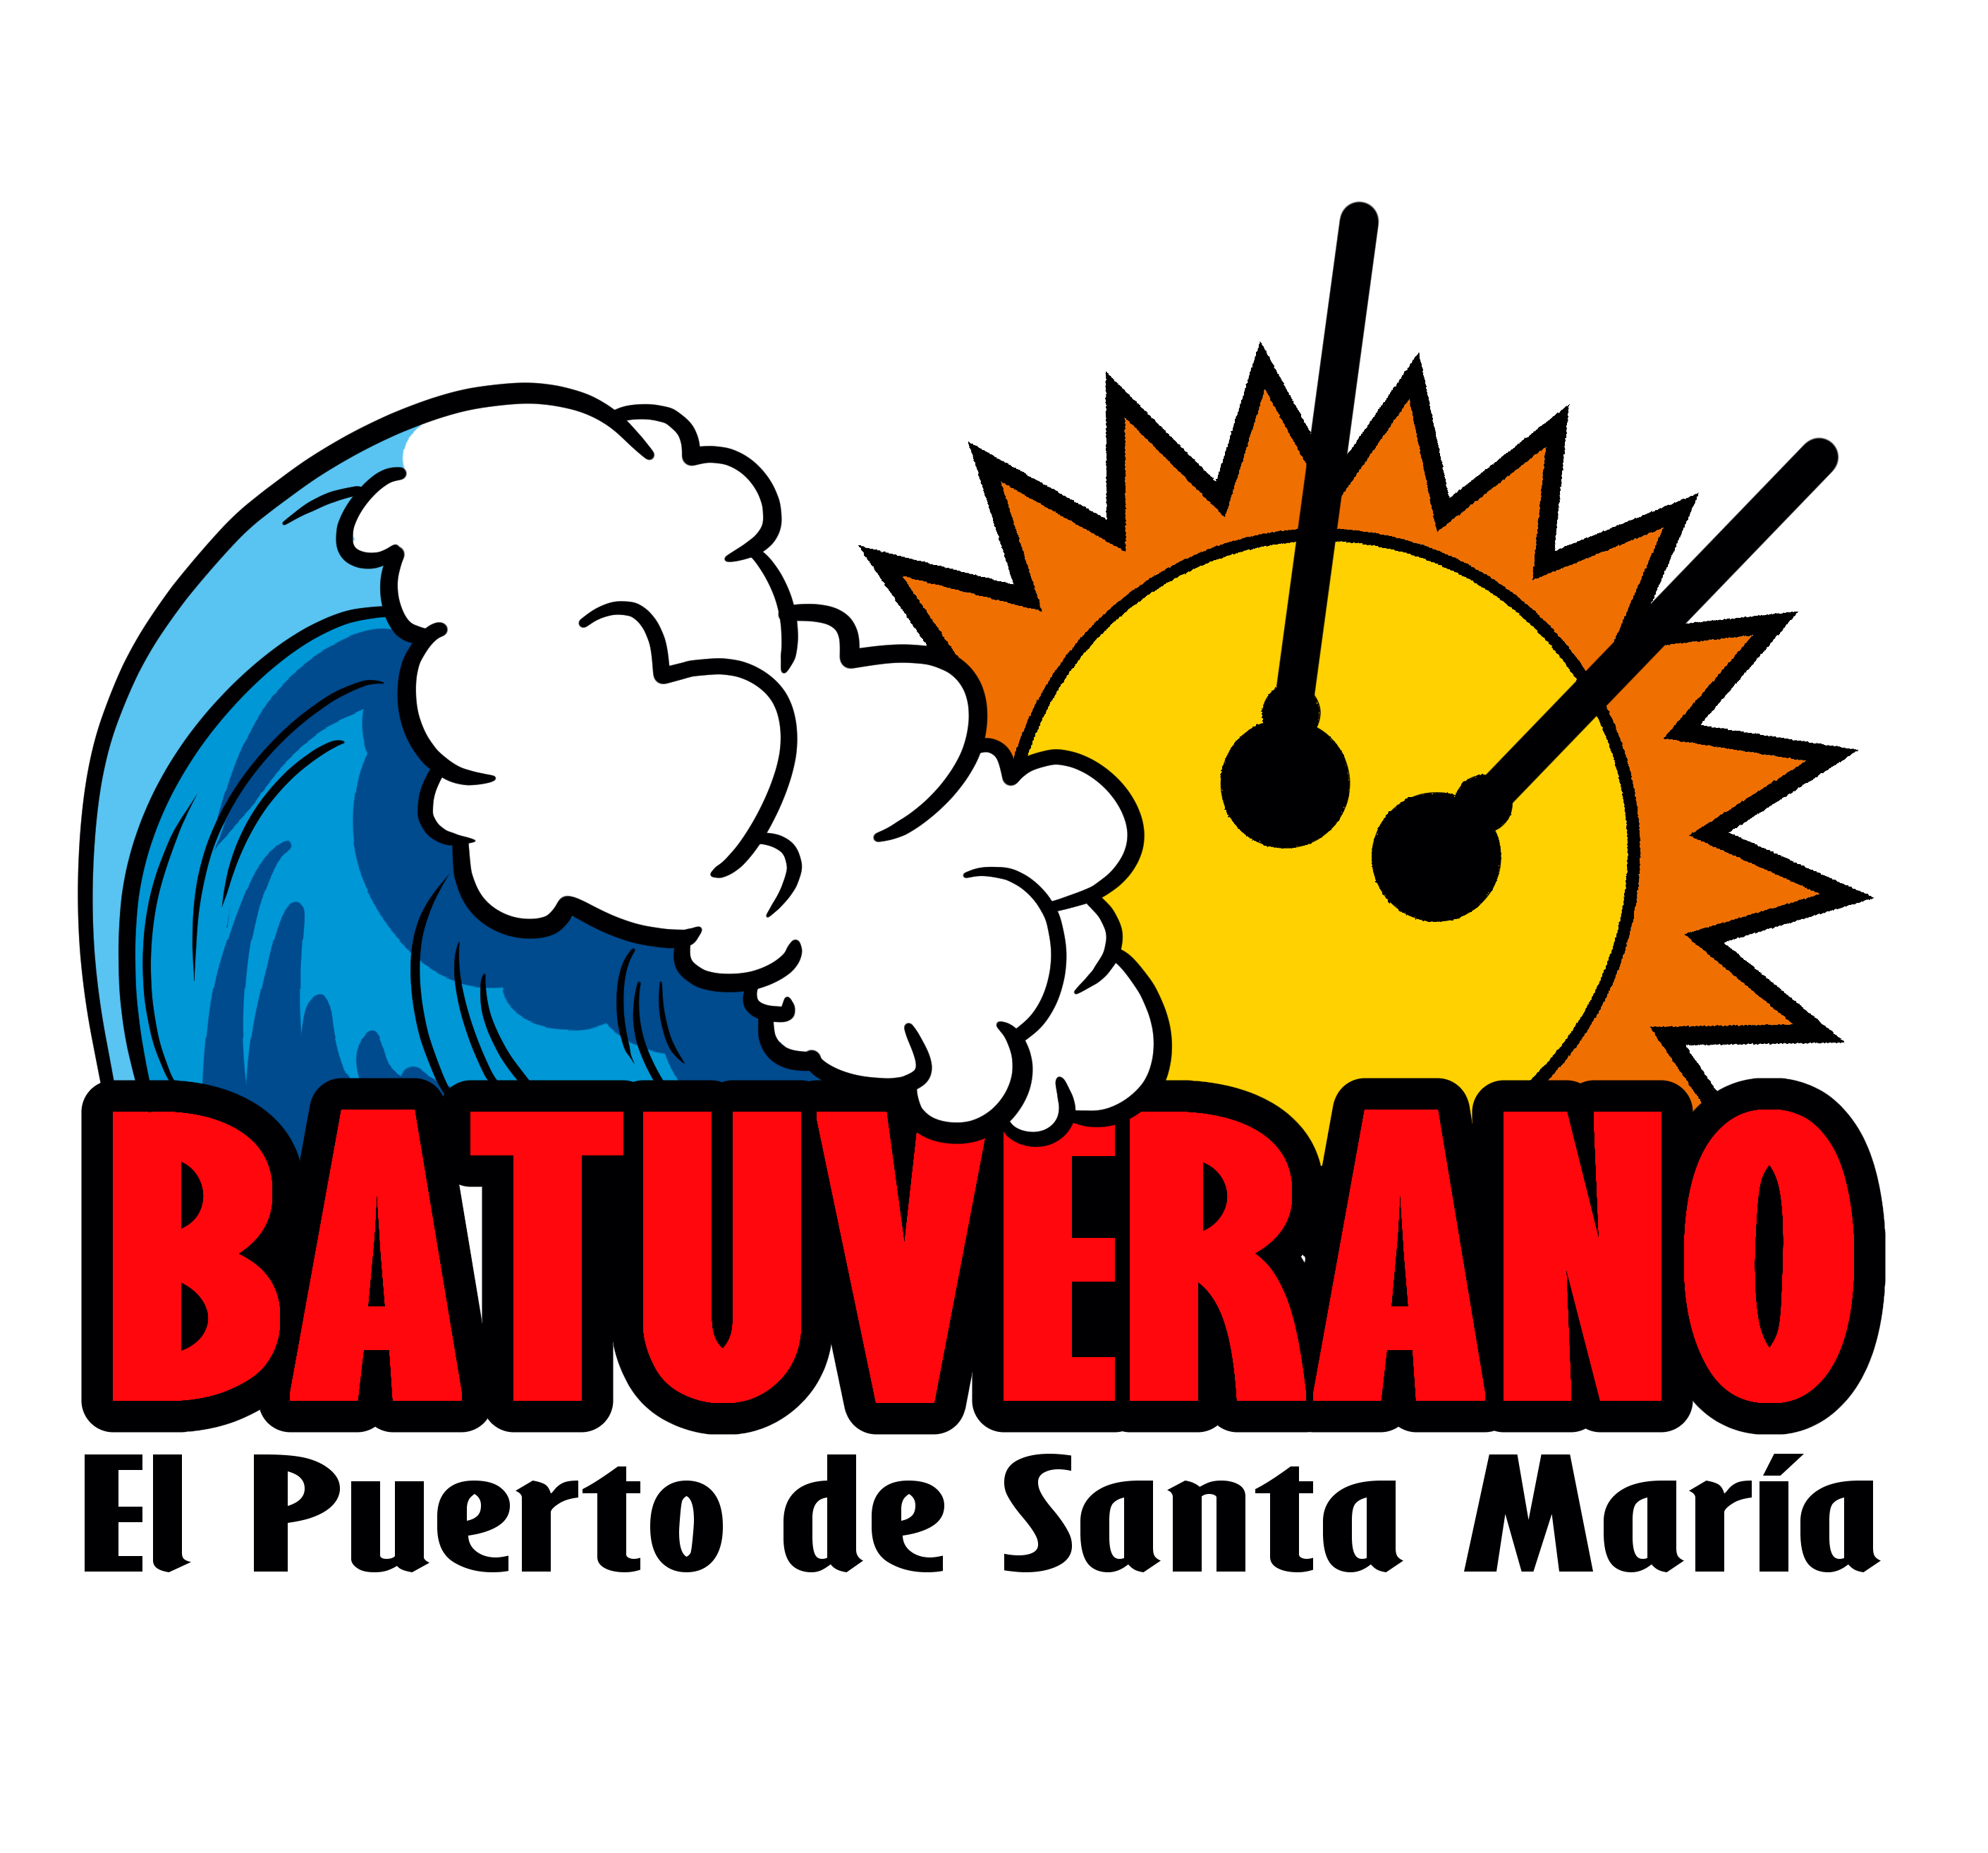 Batuverano